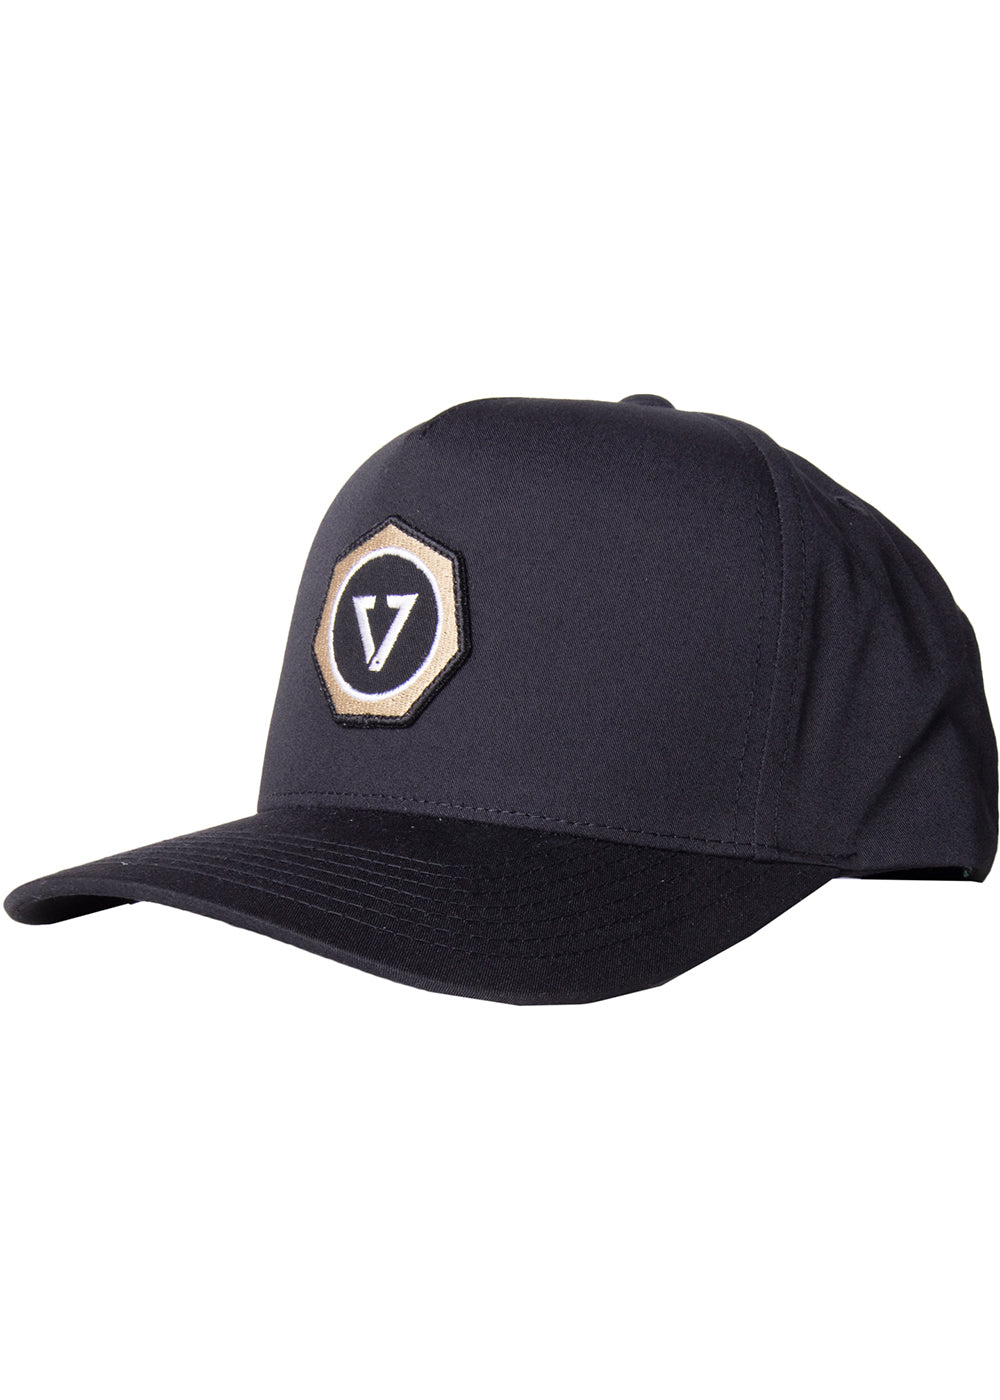 Vissla Phantom Seven Seas Eco Hat with Patch Front View 